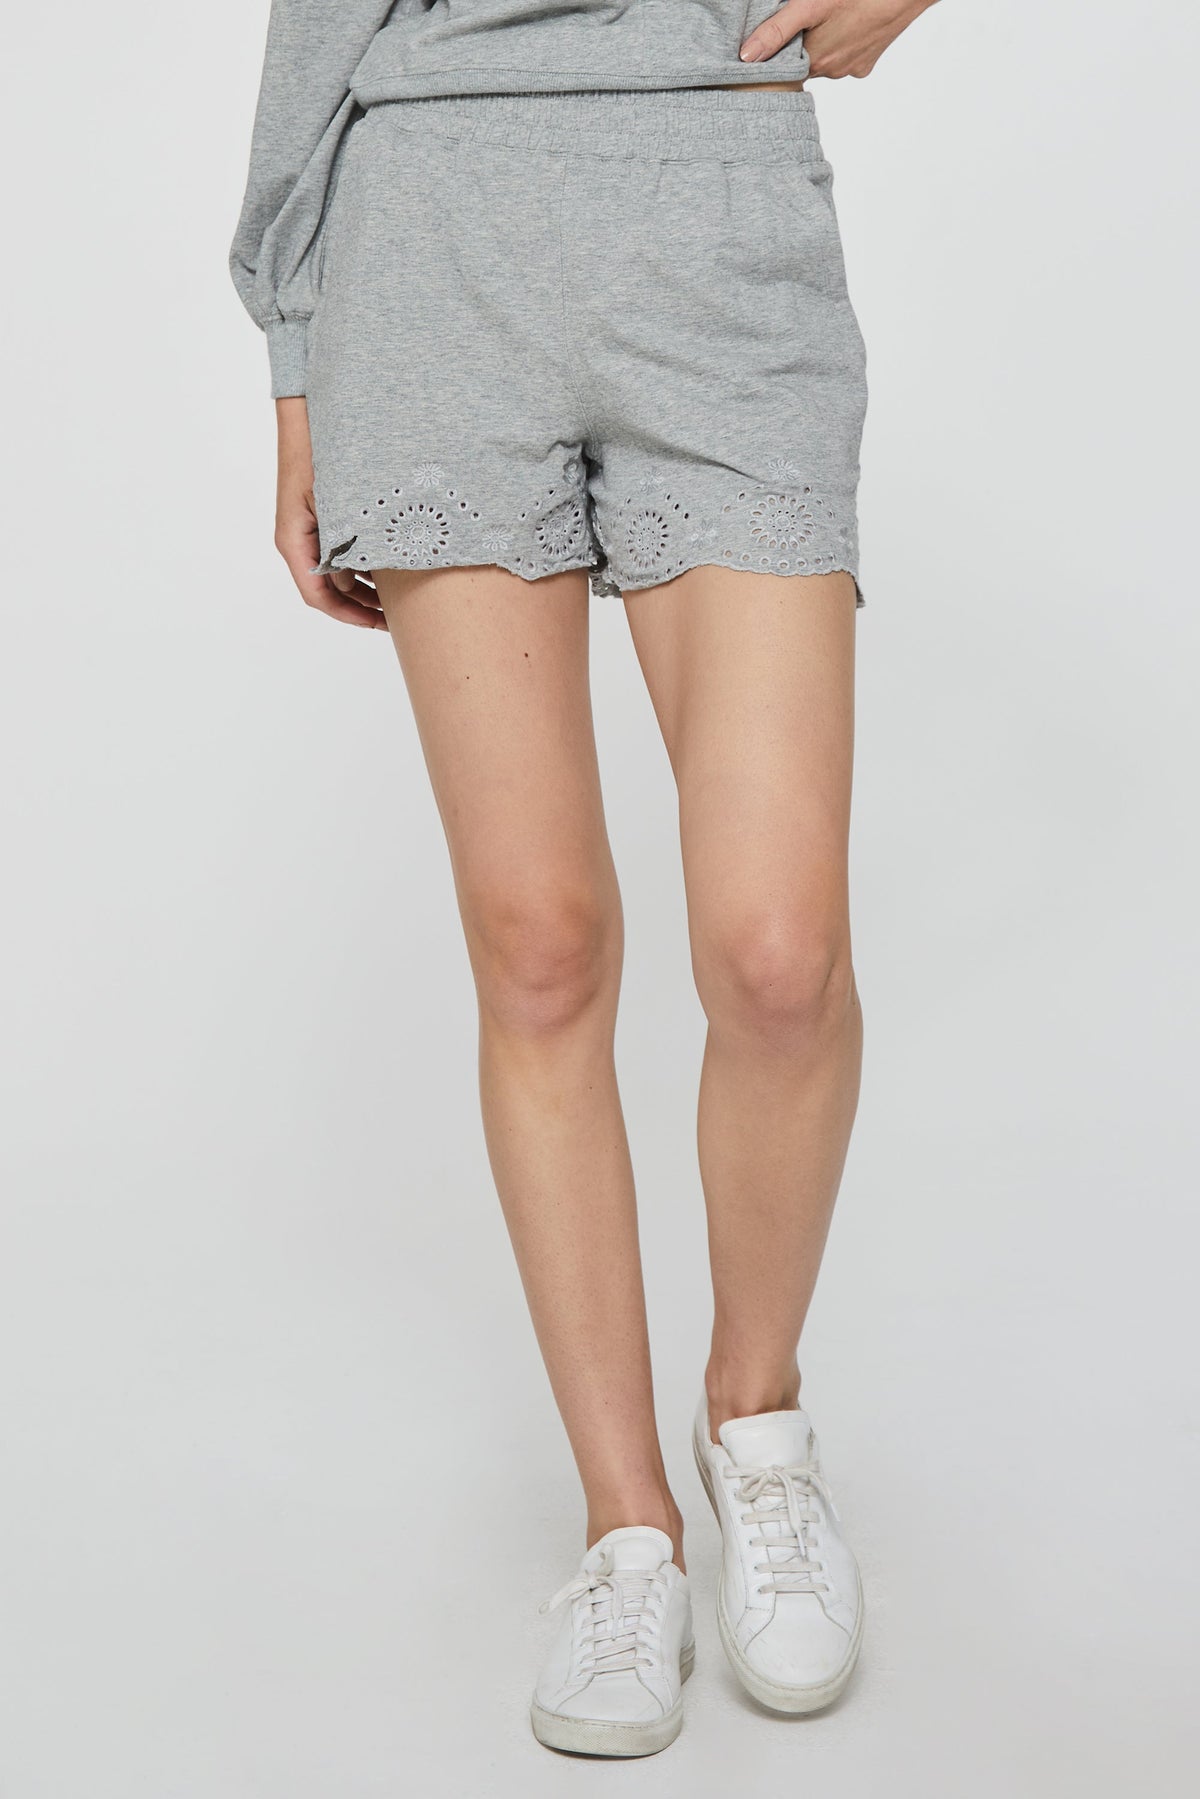 nia-eyelet-embroidery-shorts-heather-gray